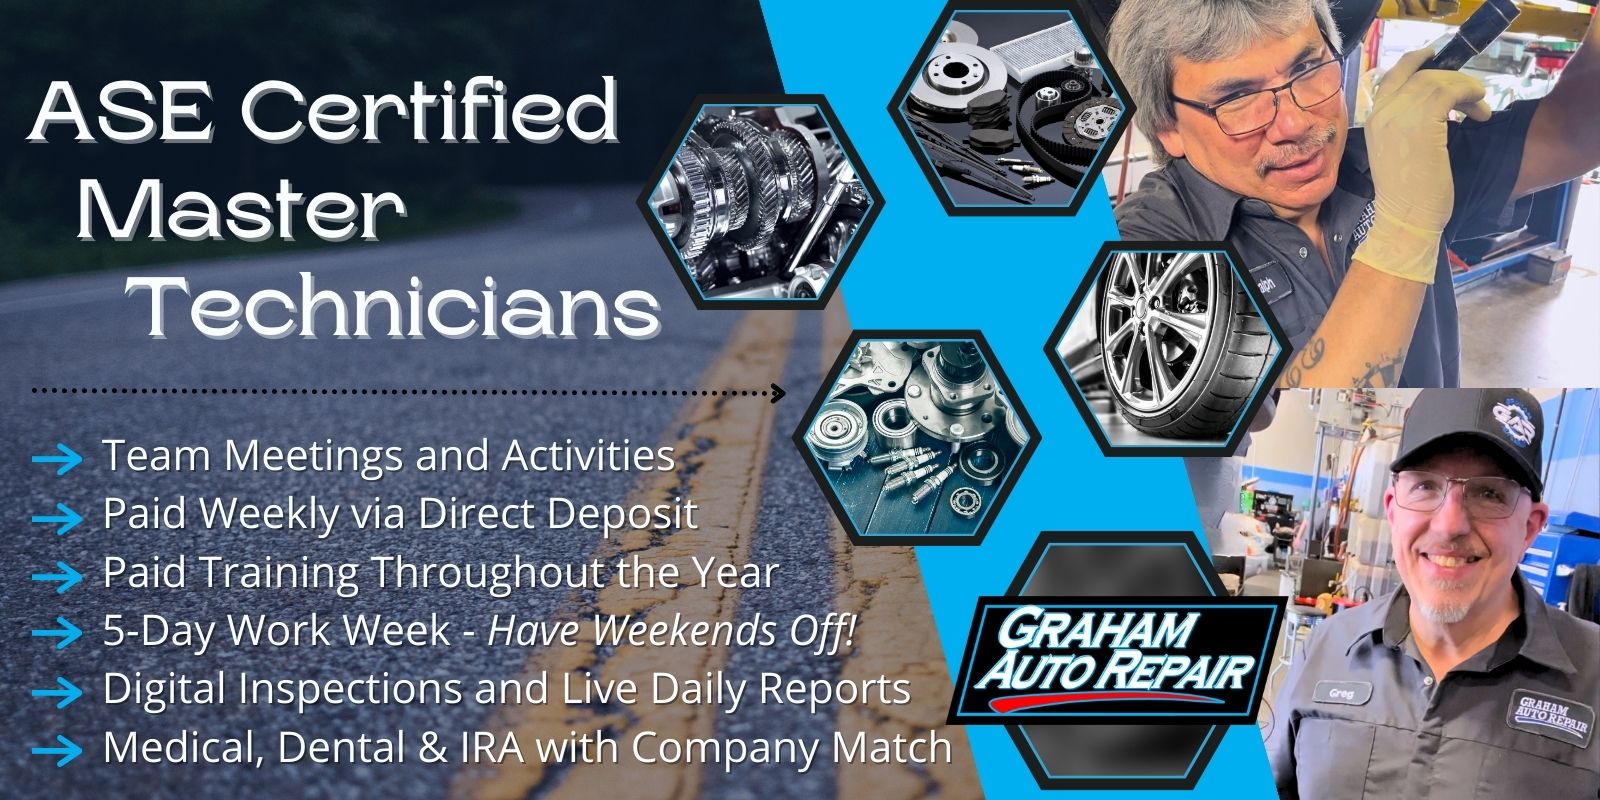 ASE Certified Master Technician Job at Graham Auto Repair